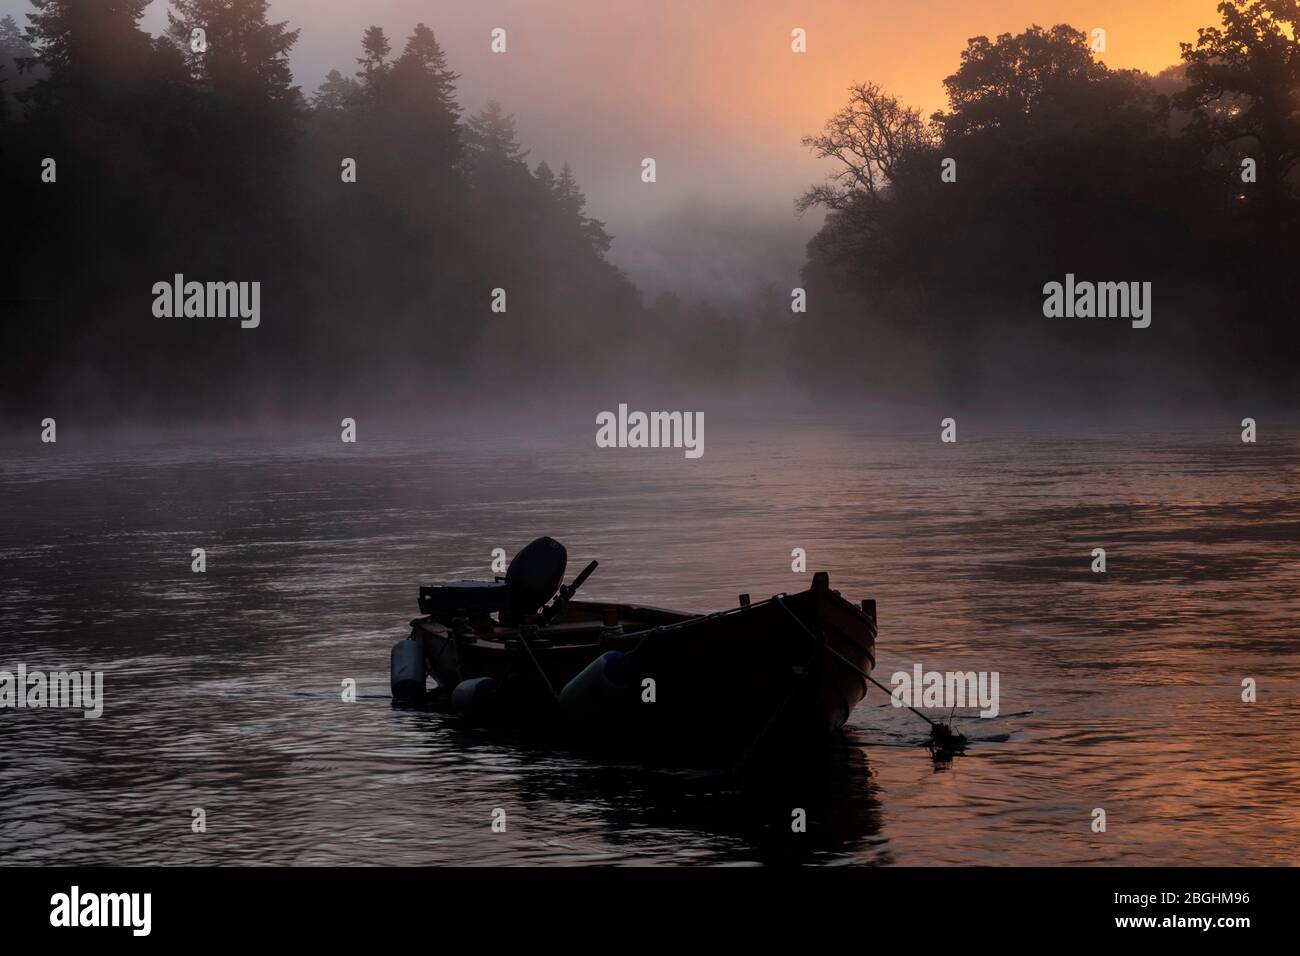 Boat on a misty river Stock Photo